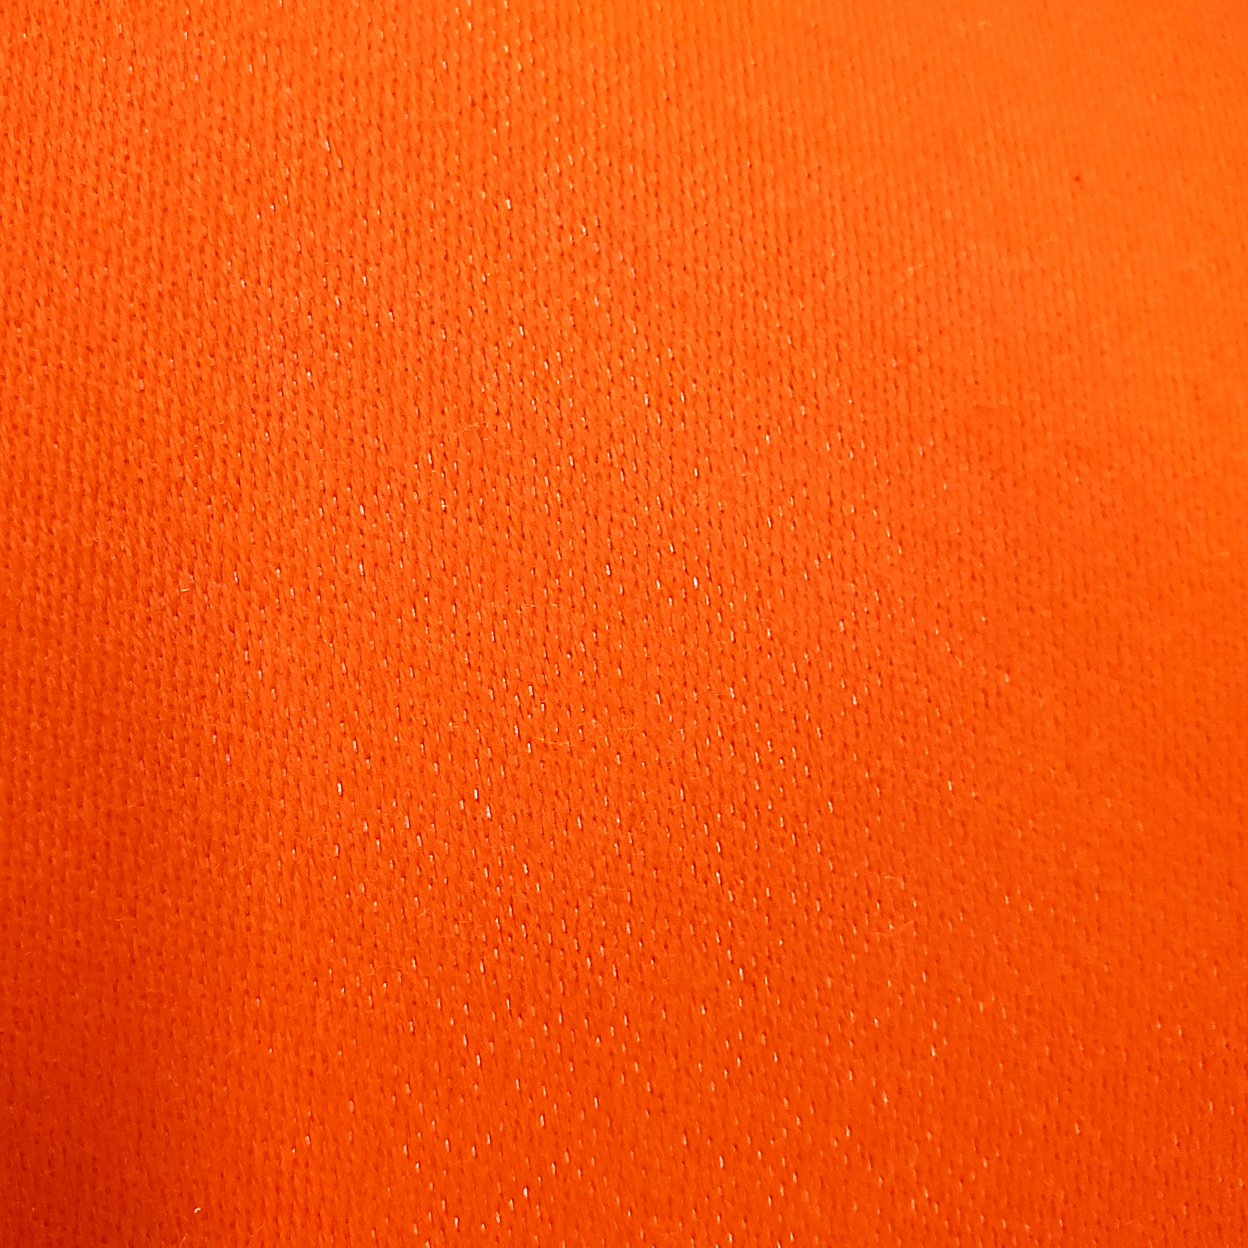 Neon Orange Throw Pillow 16x16, With Polyfill Insert